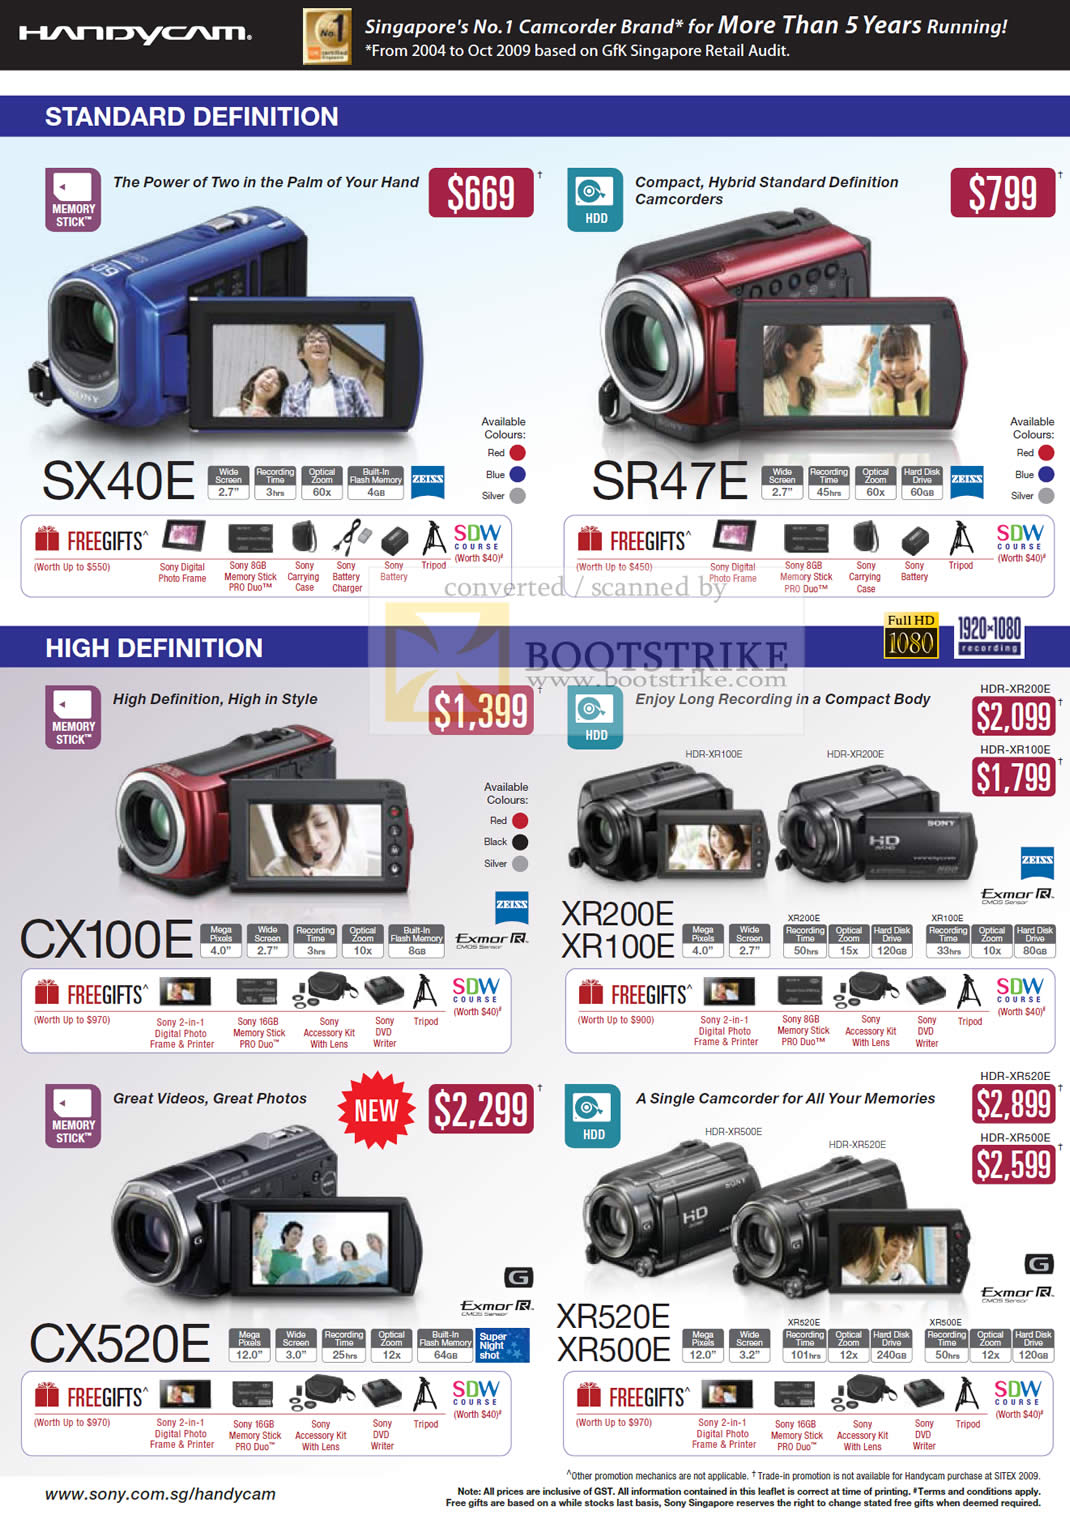 Sitex 2009 price list image brochure of Sony HandyCam Video Camcorder SX40E SR47E CX100E XR200E CX520E XR520E